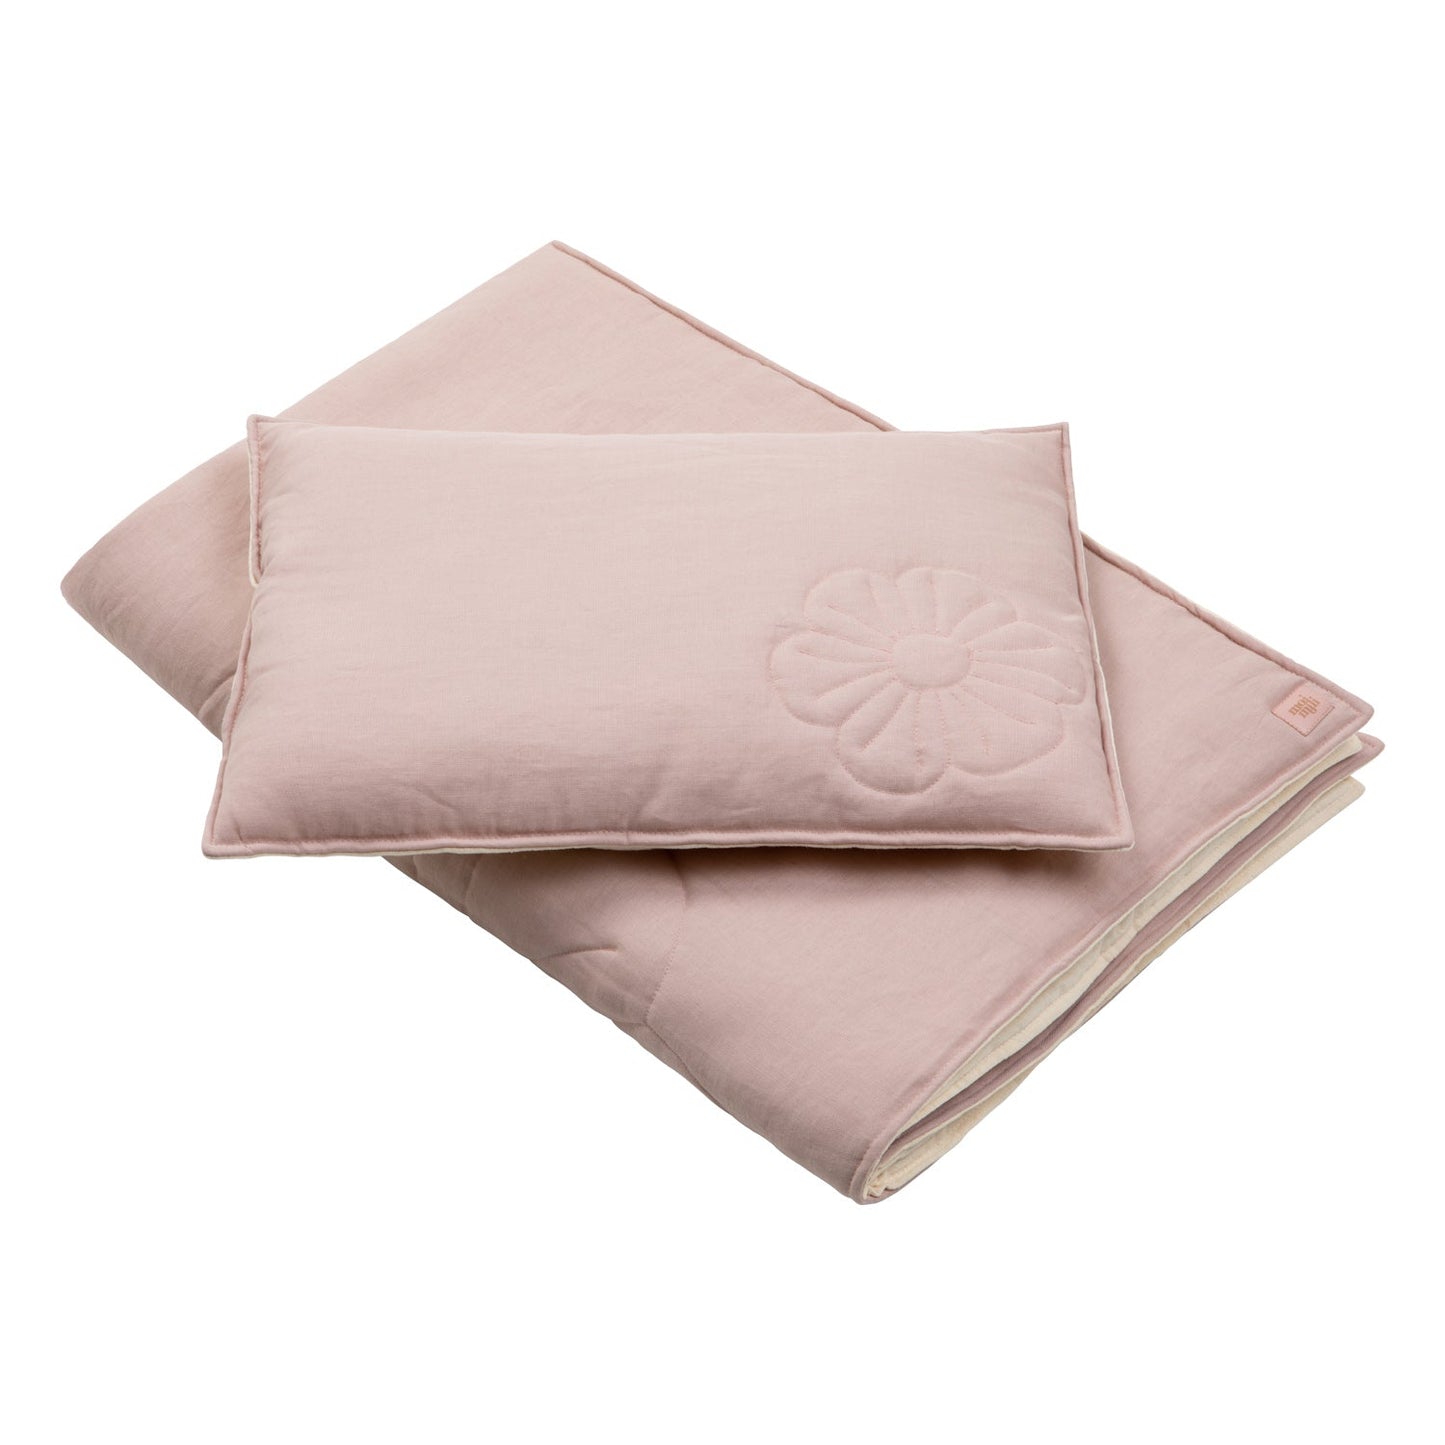 Linen "Powder Pink" Flower Child Cover Set (Large)